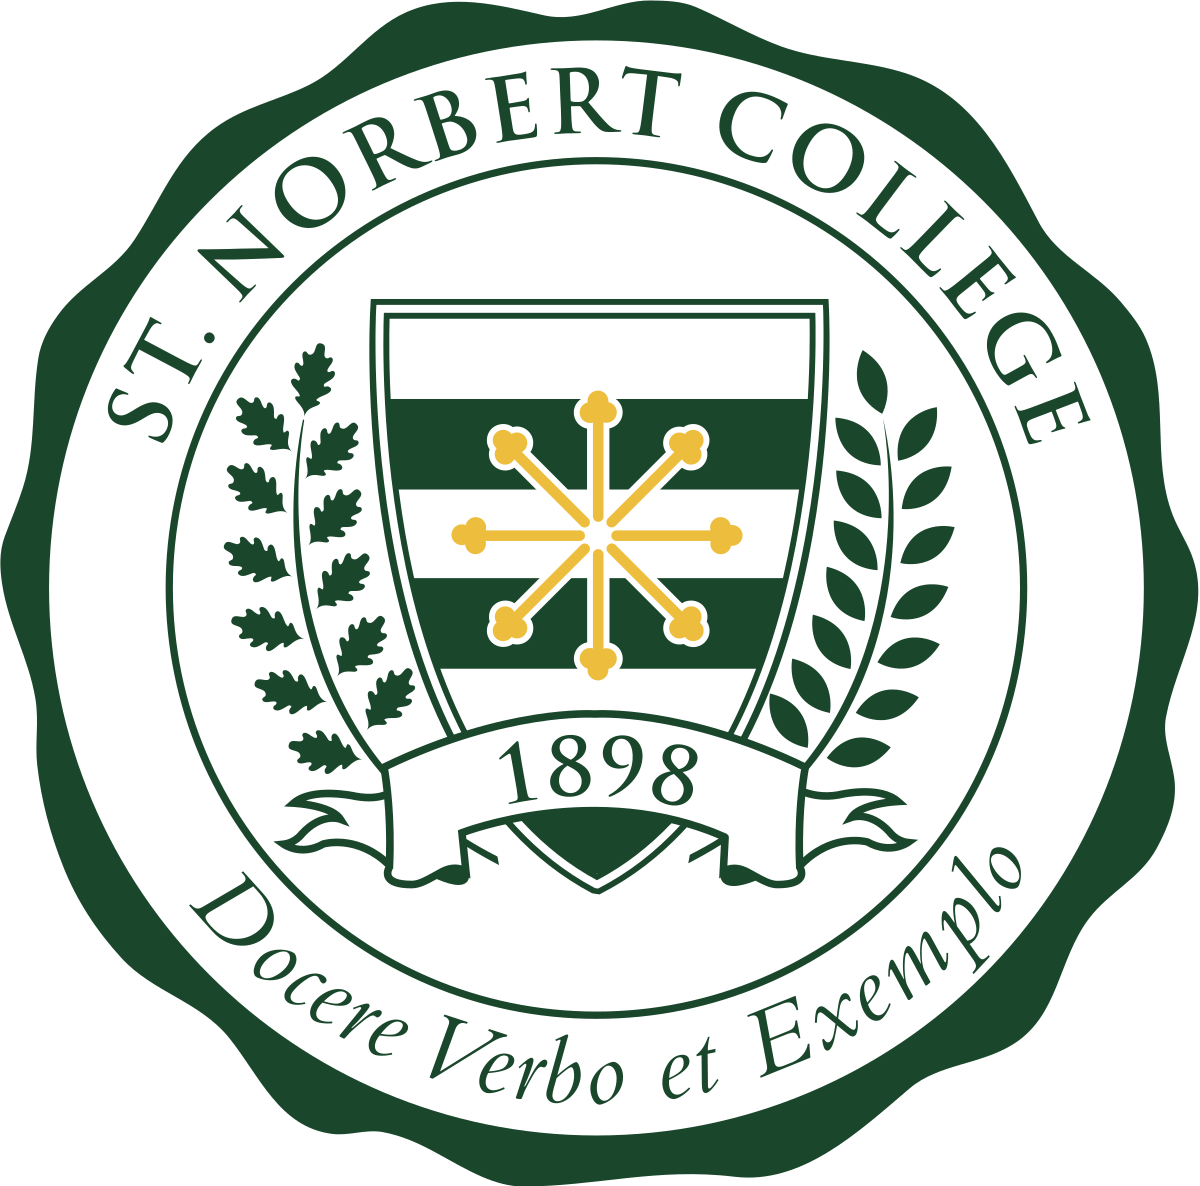 Saint Norbert College The Intercollegiate Registry of Academic Costume